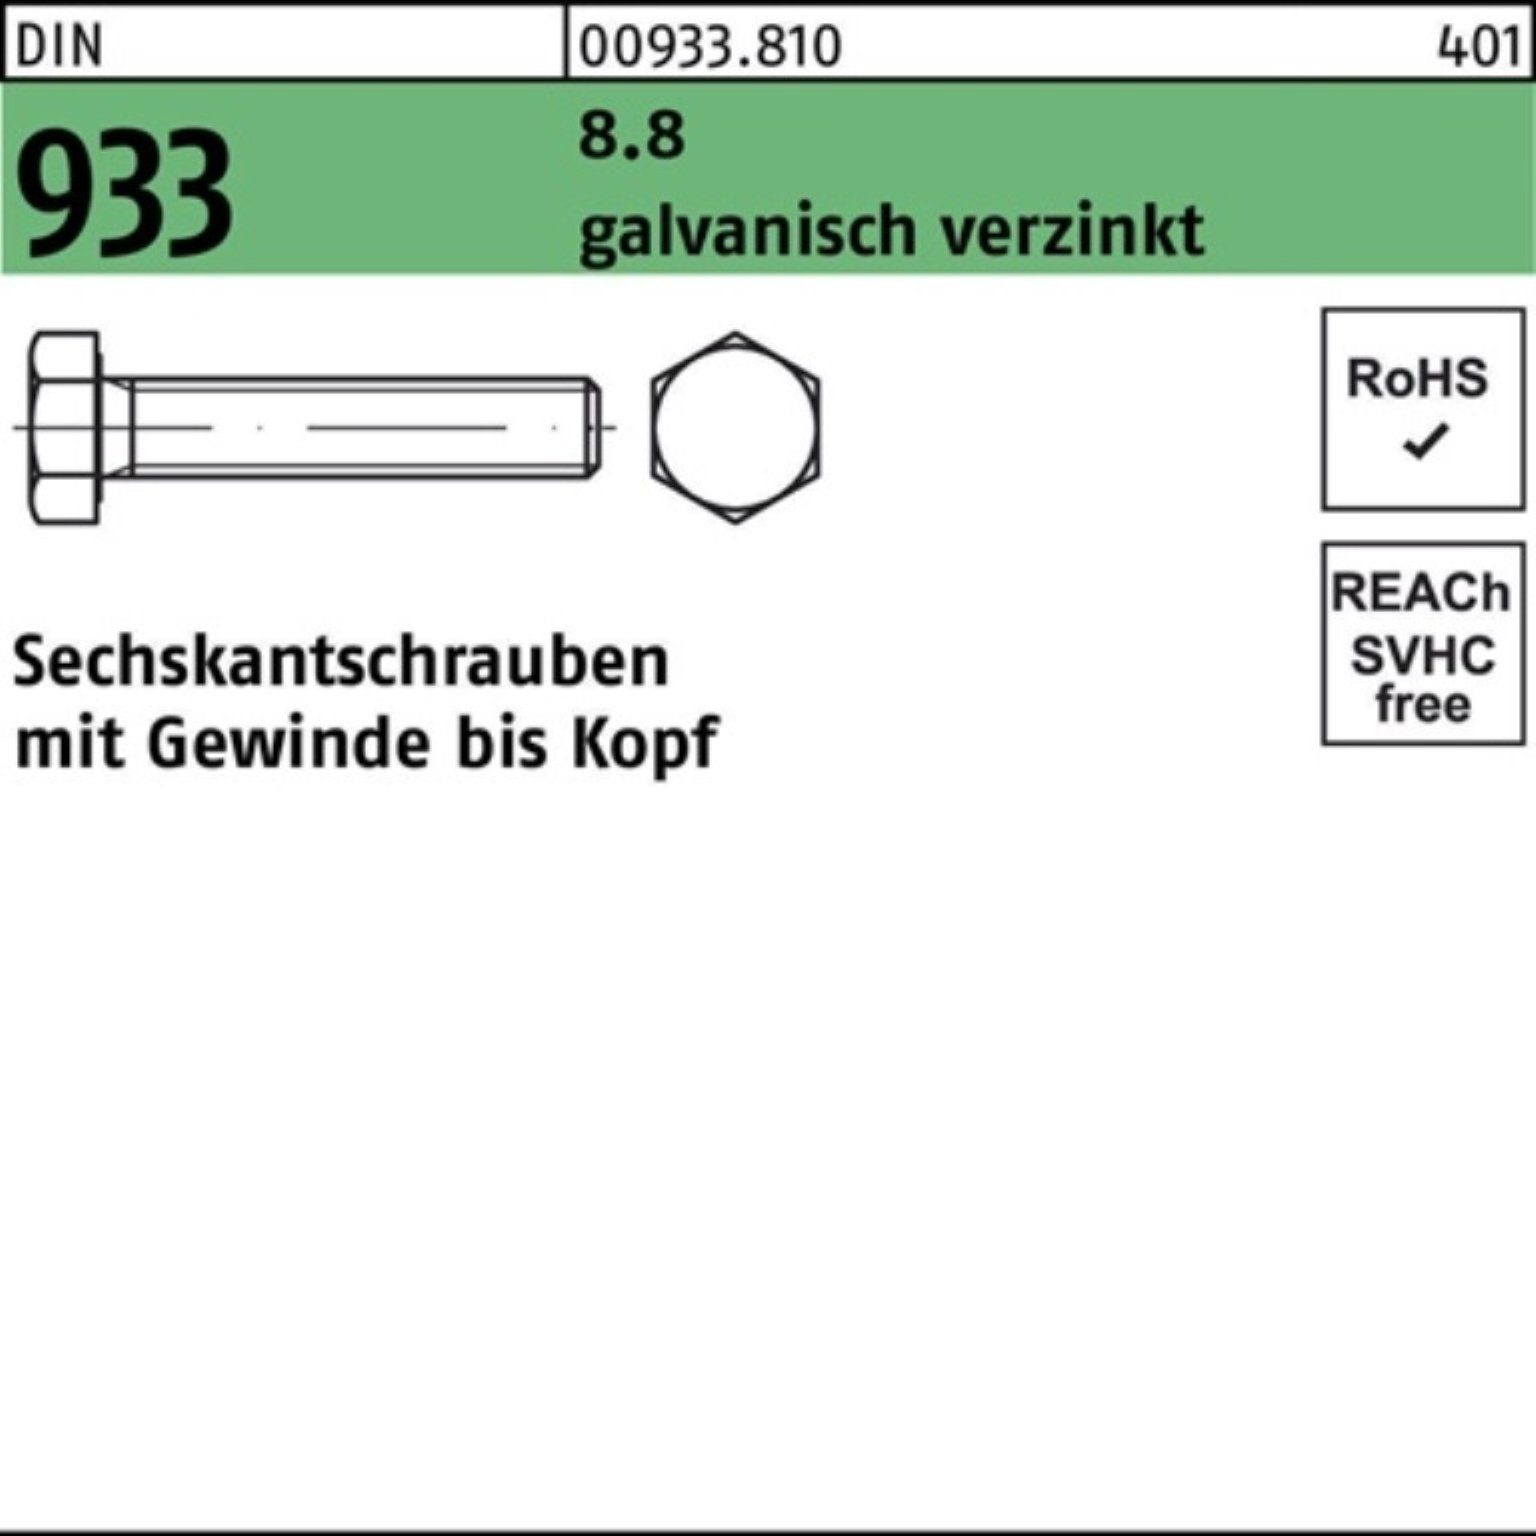 DIN Sechskantschraube 100er M30x Reyher Pack 933 1 galv.verz. Stü 8.8 Sechskantschraube 120 VG